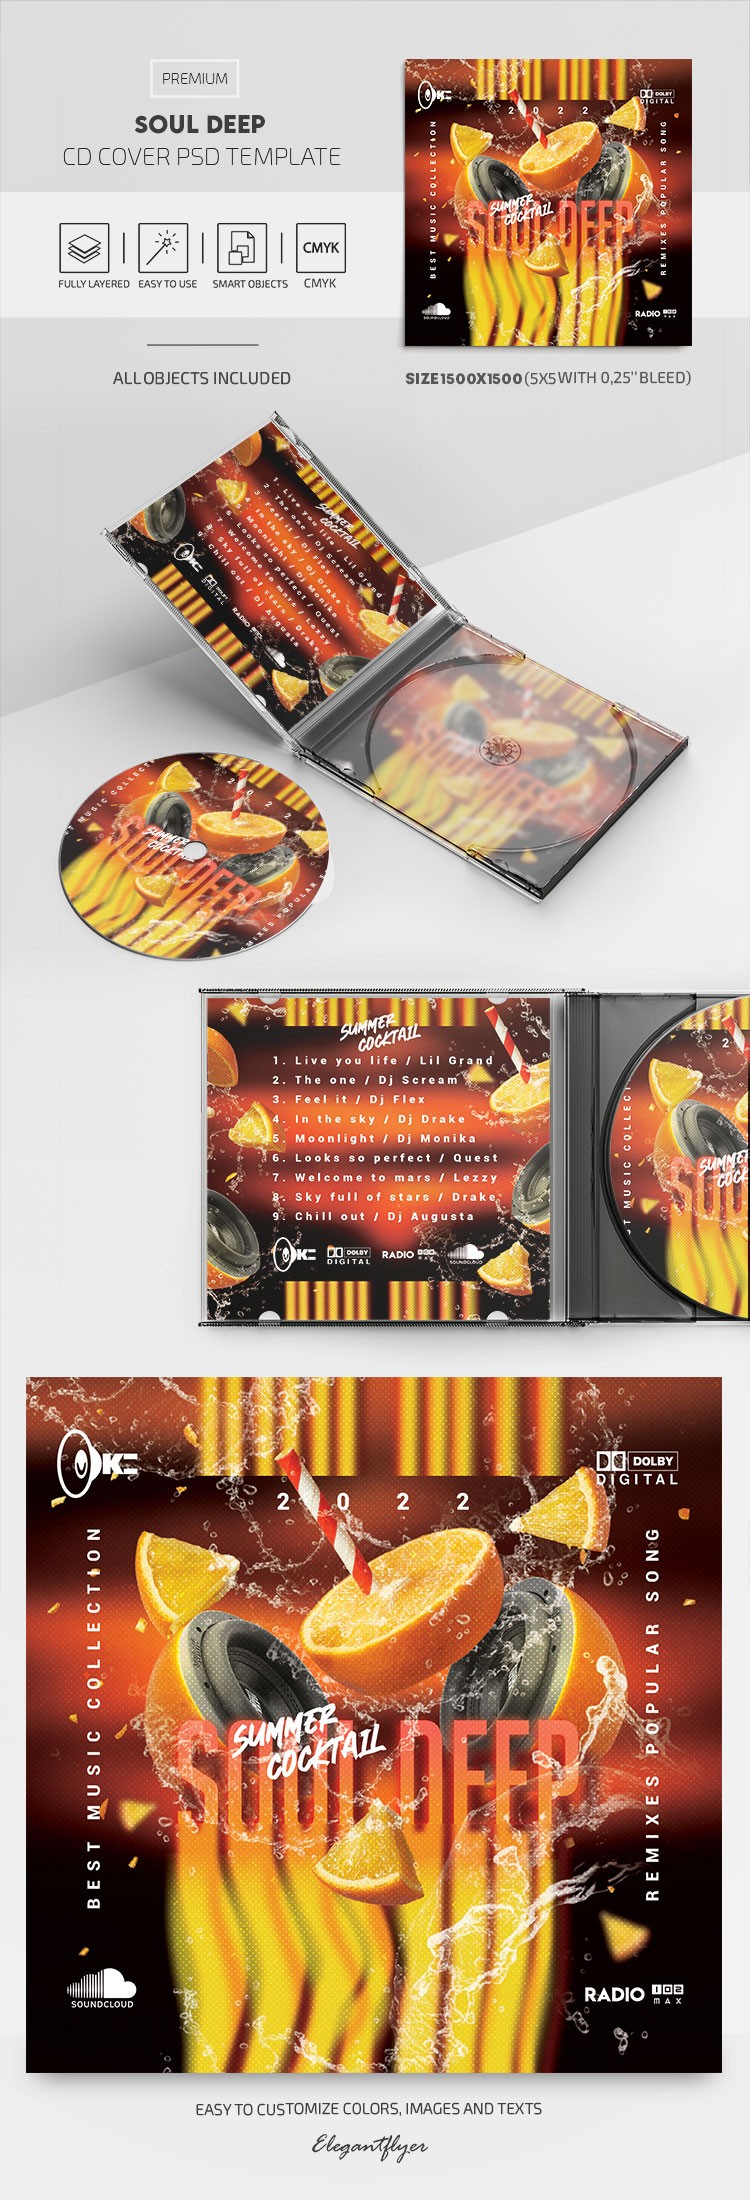 Copertina del CD "Soul Deep" by ElegantFlyer